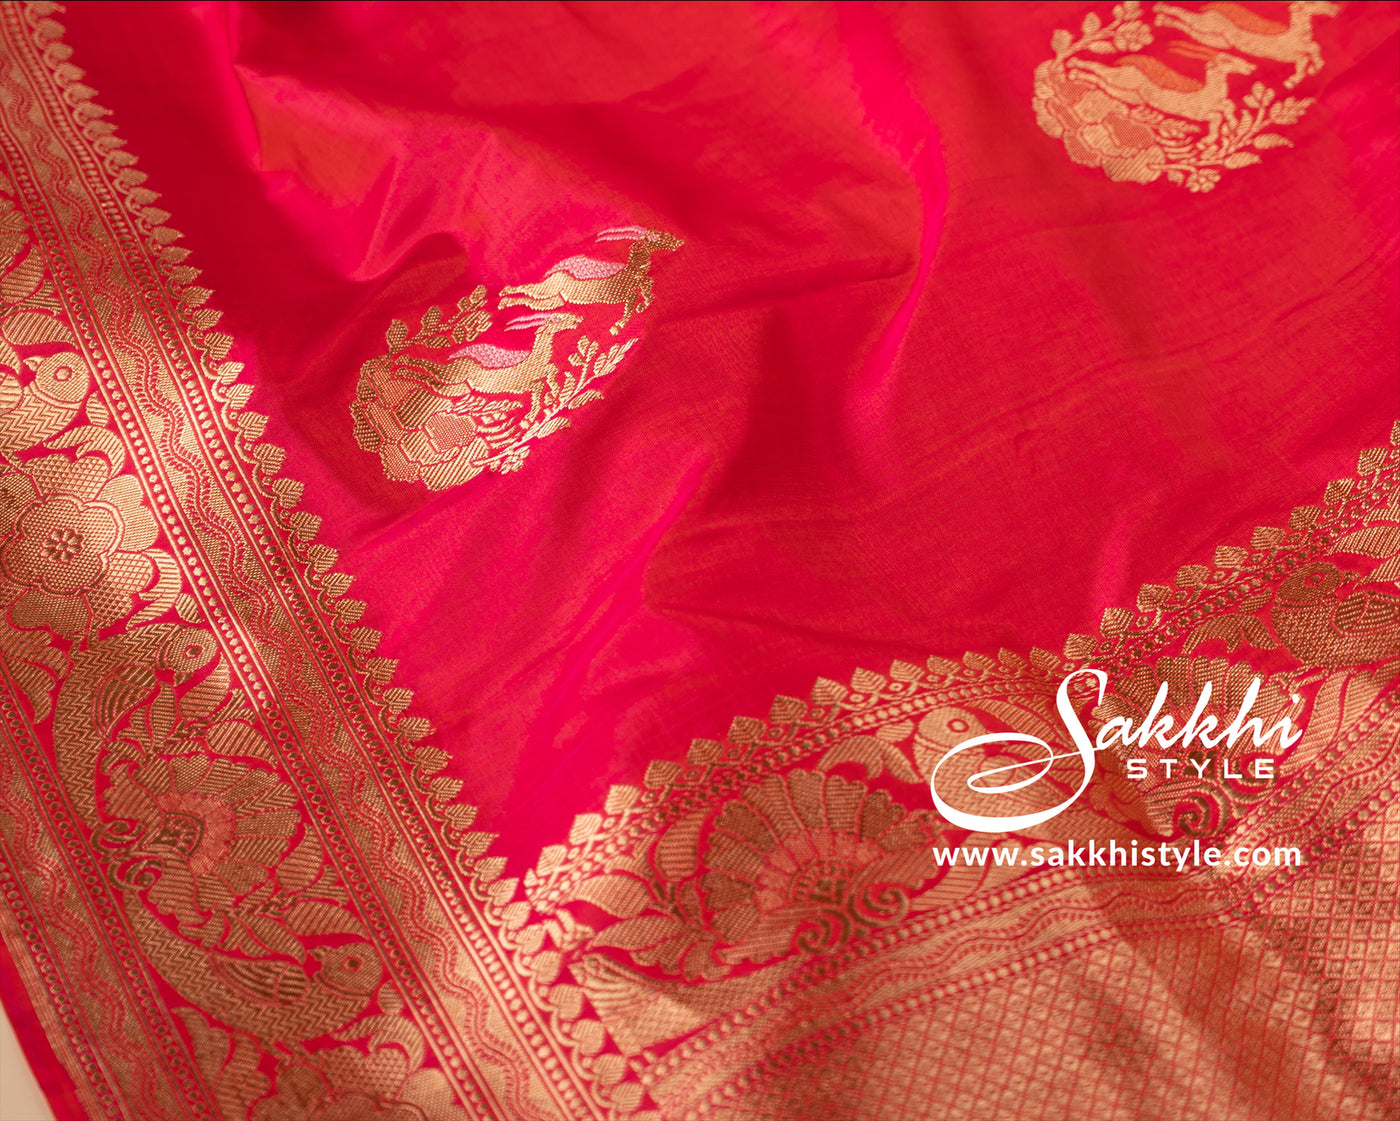 Sakkhi Style Katan Banaras Silk Pink Saree with Blouse and Gold Work - Sakkhi Style